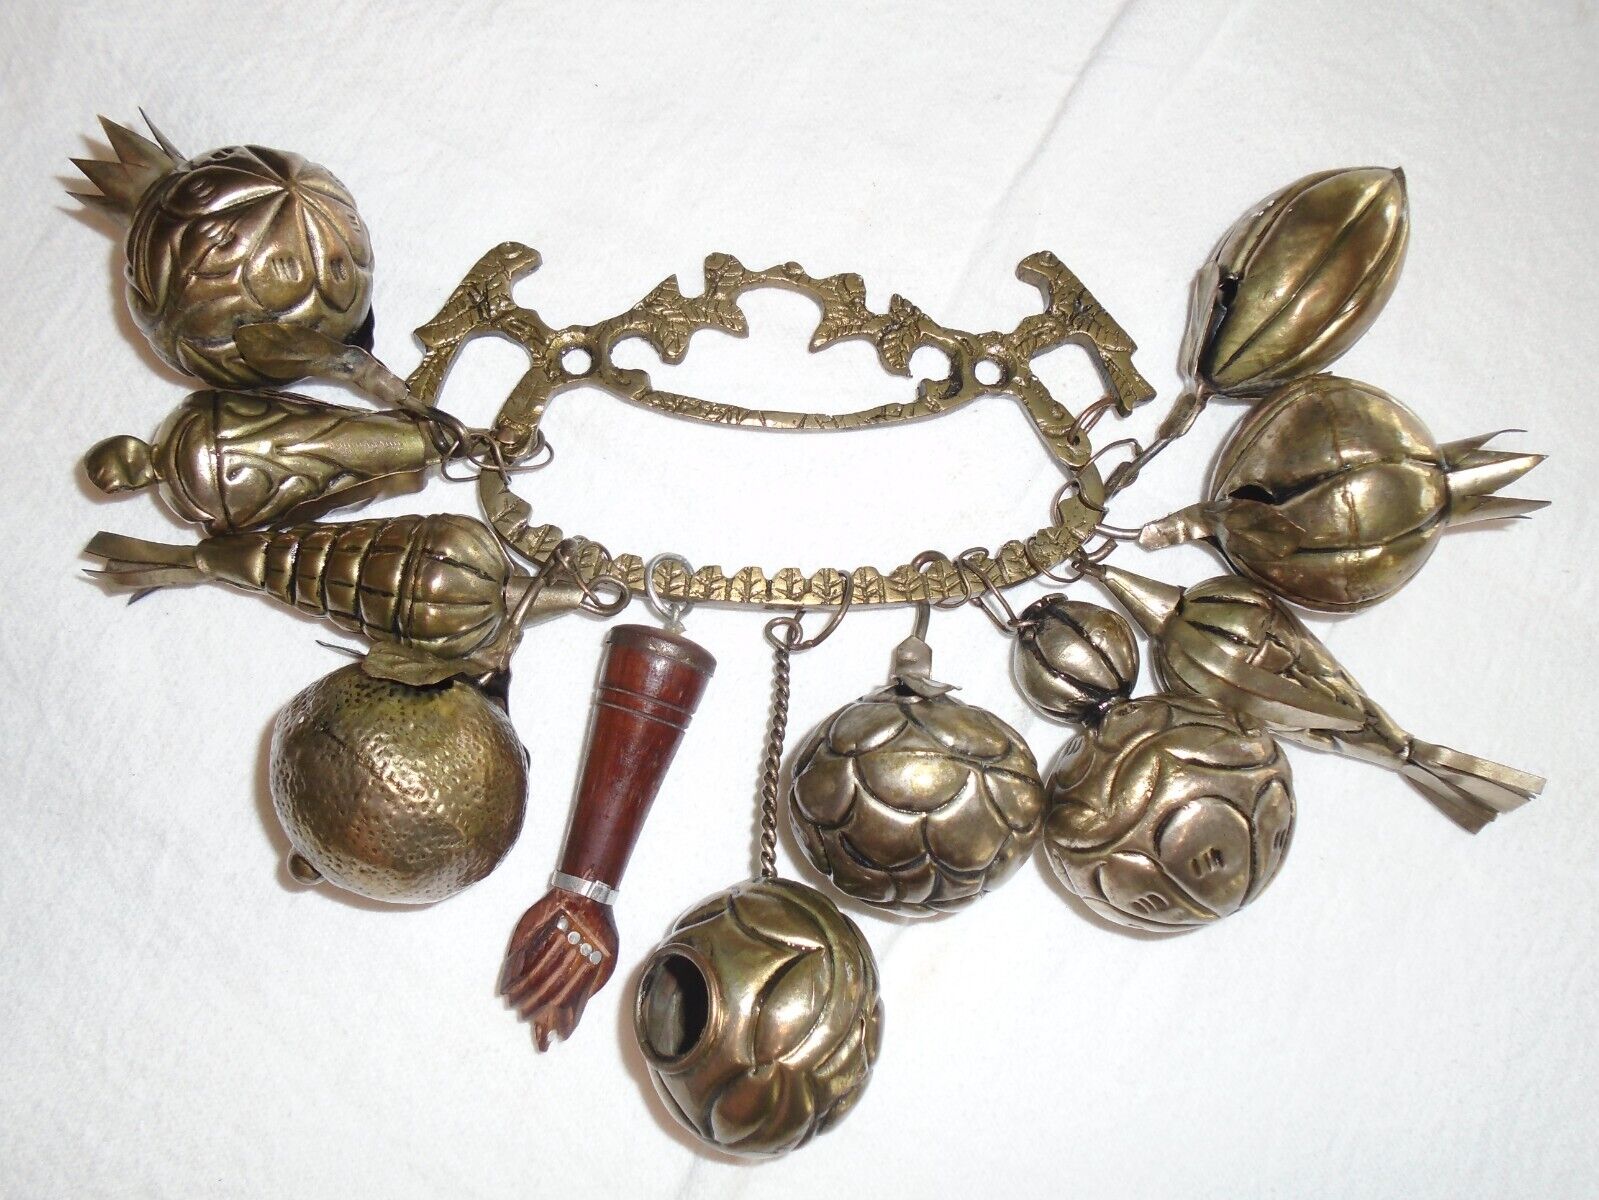 Antique LARGE Penca de Balangandan South American Amulet 11 Charms Wall Hanging